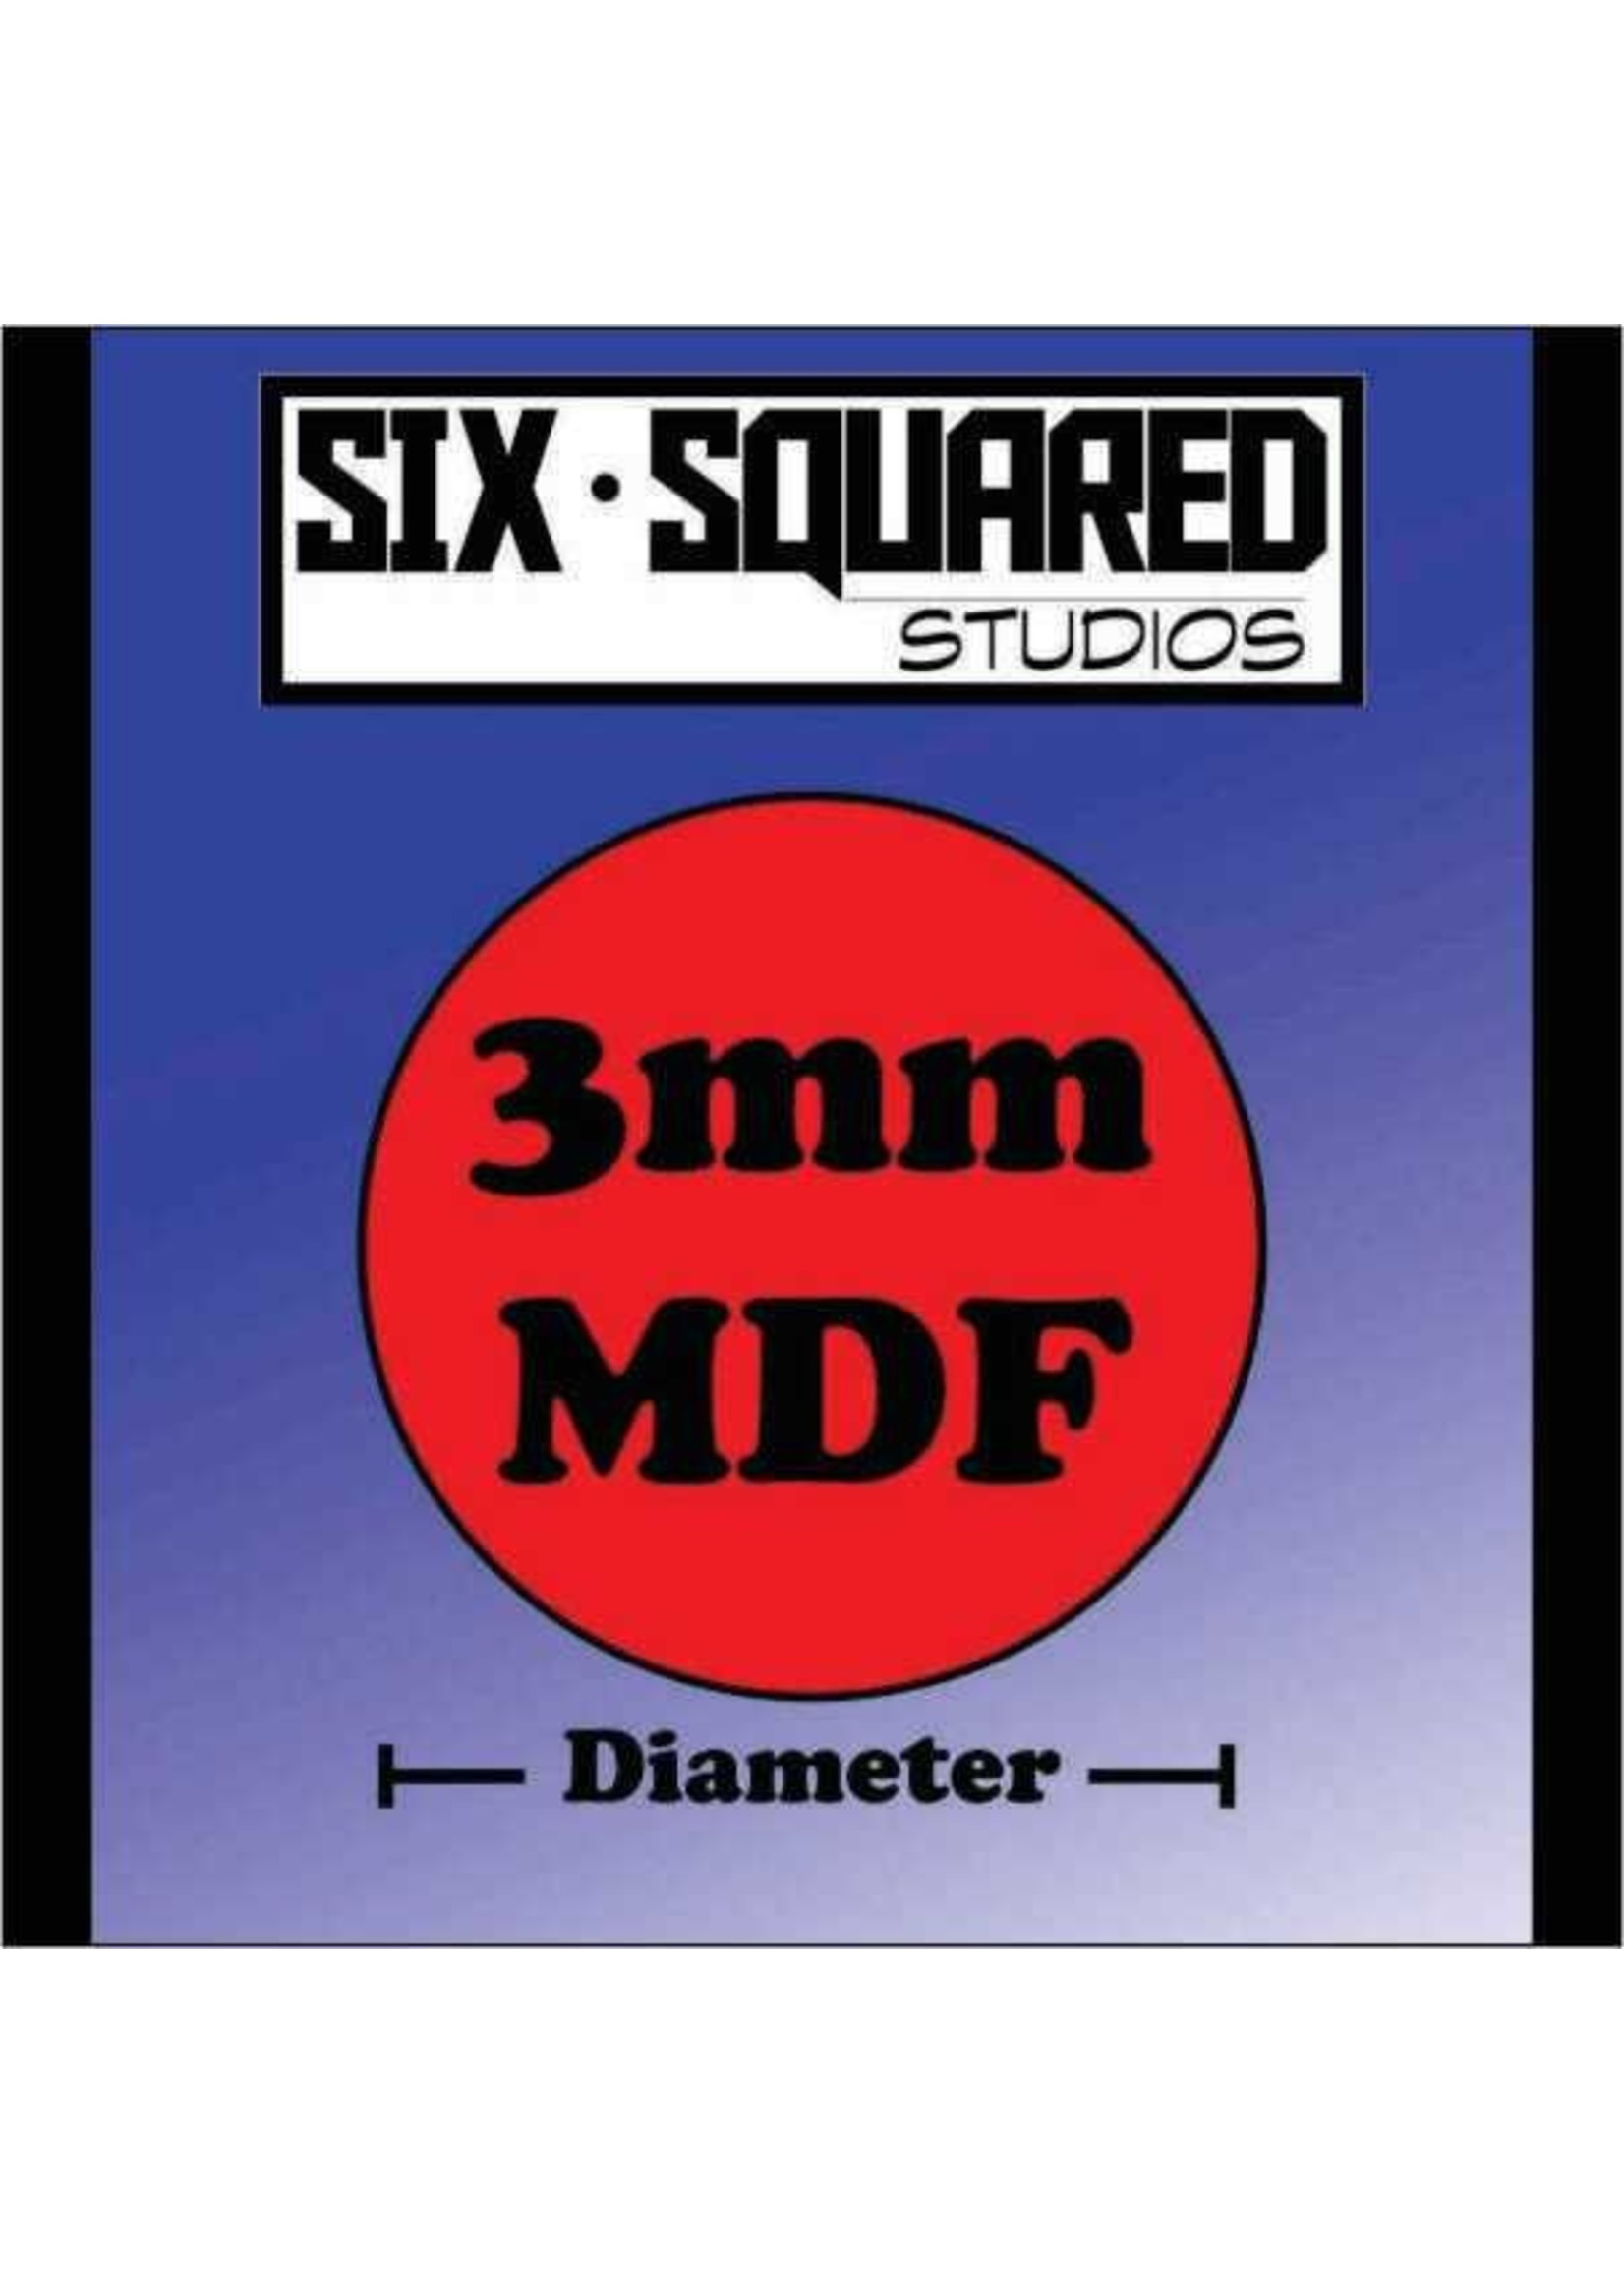 6 Squared Studios 65mm MDF round bases